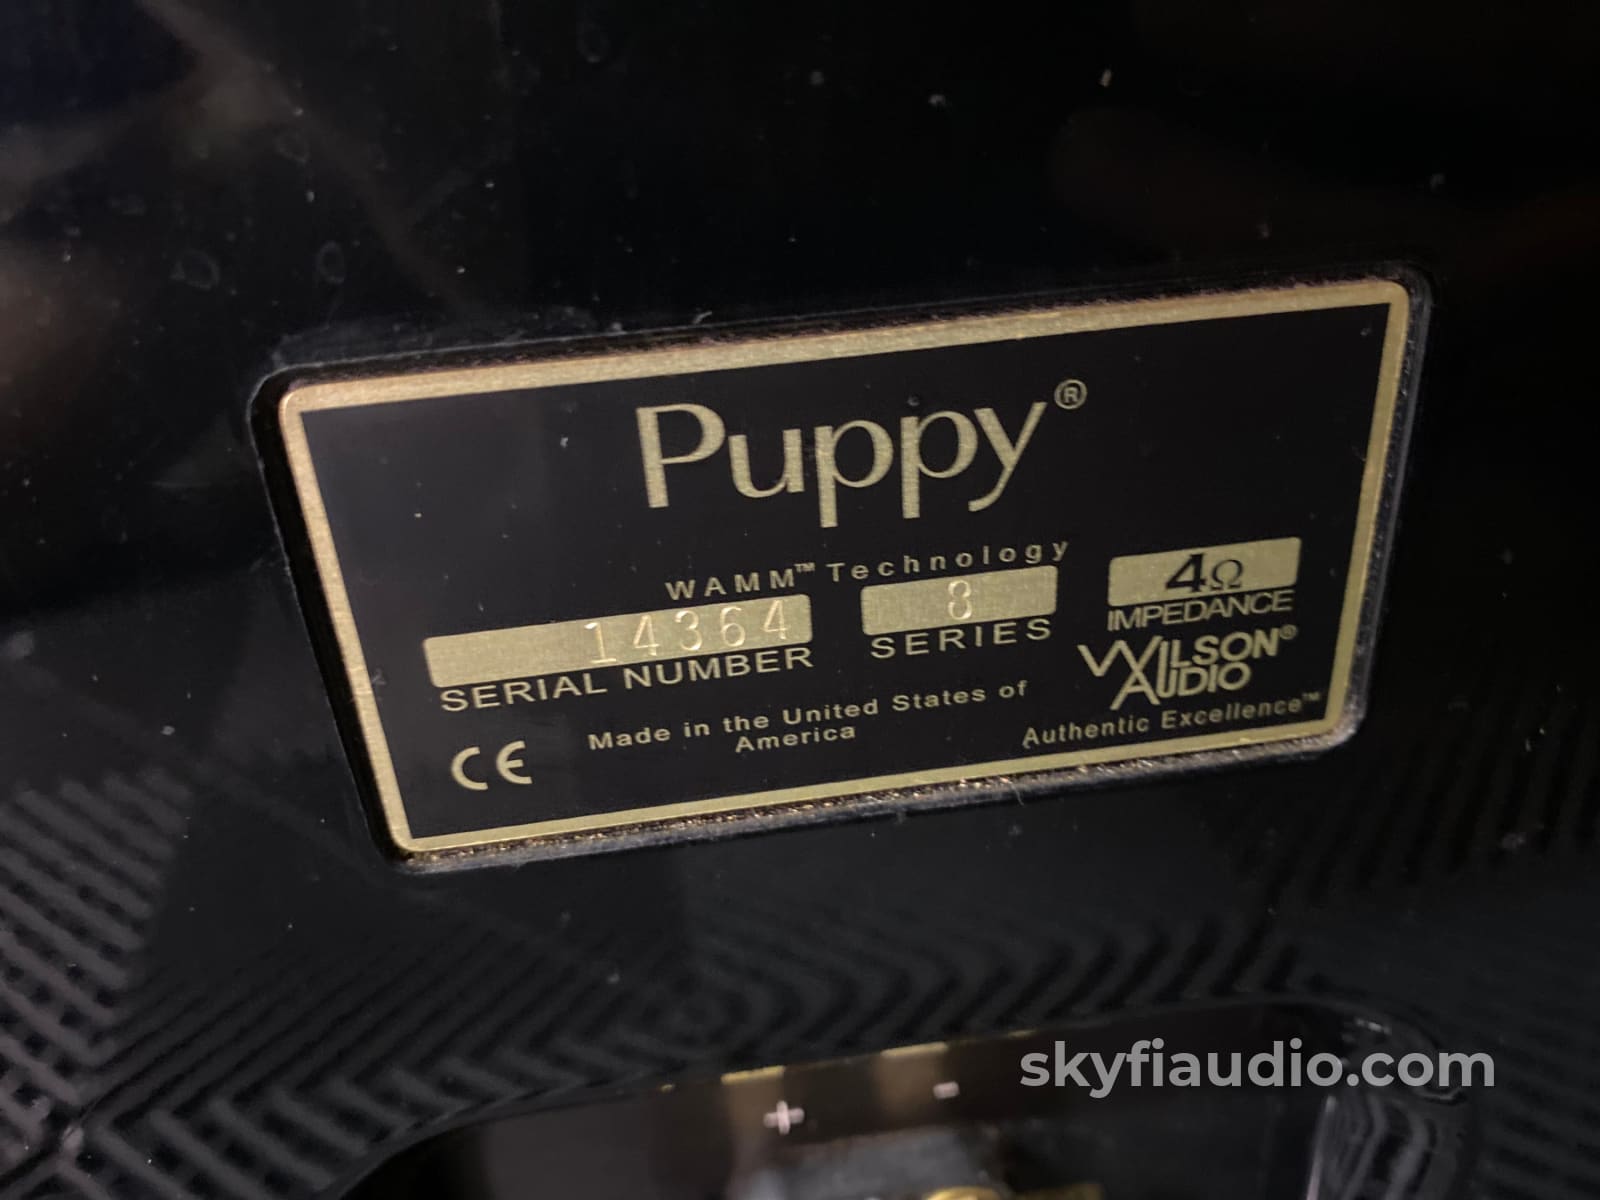 Wilson Audio Watt Puppy 8 Speakers. The Best And Last Version Speakers